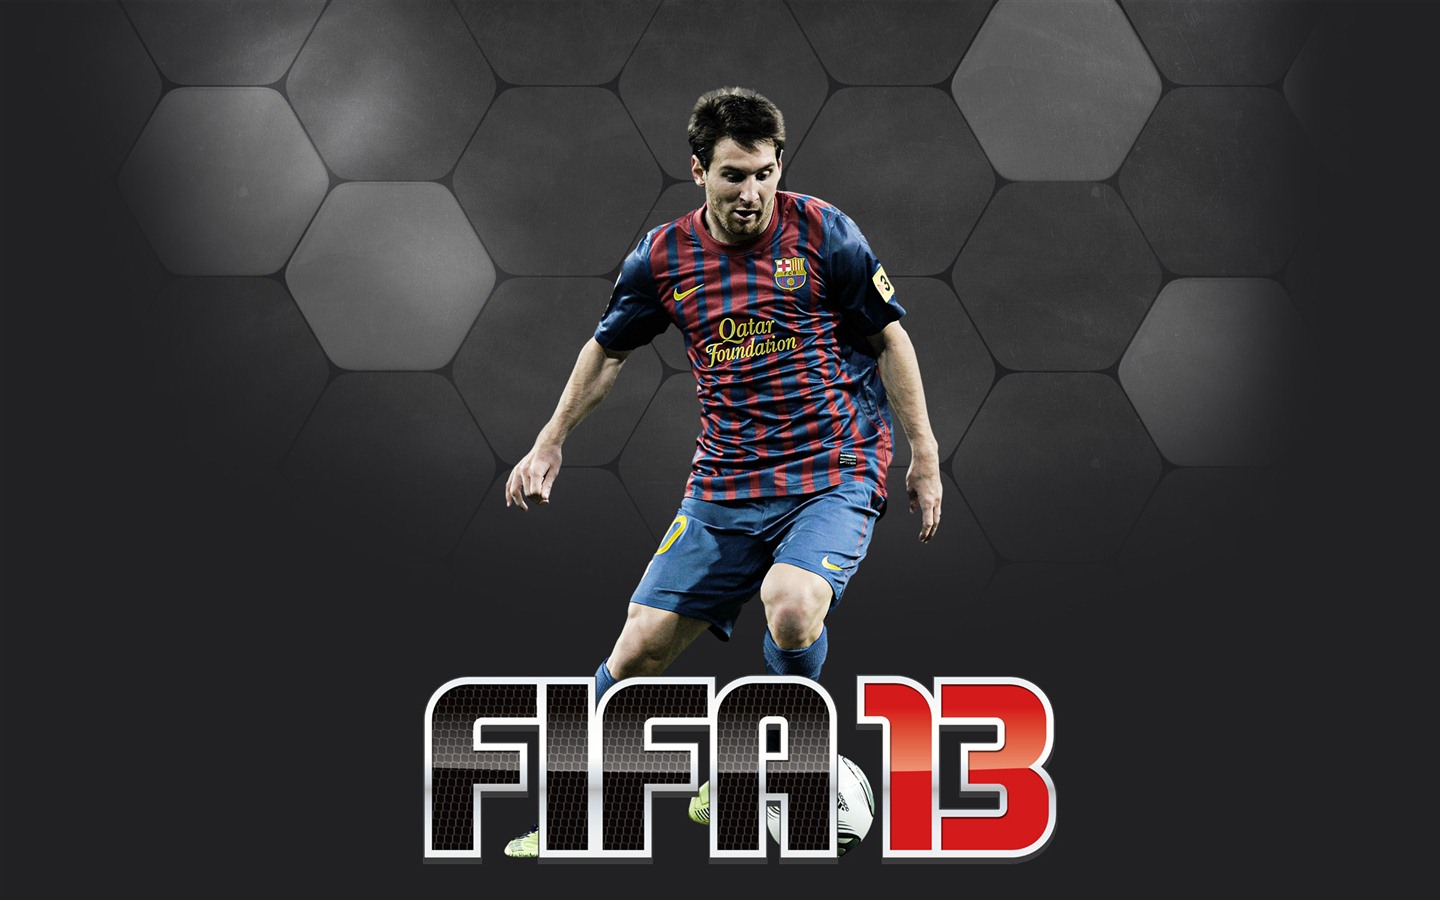 FIFA 13 游戏高清壁纸6 - 1440x900